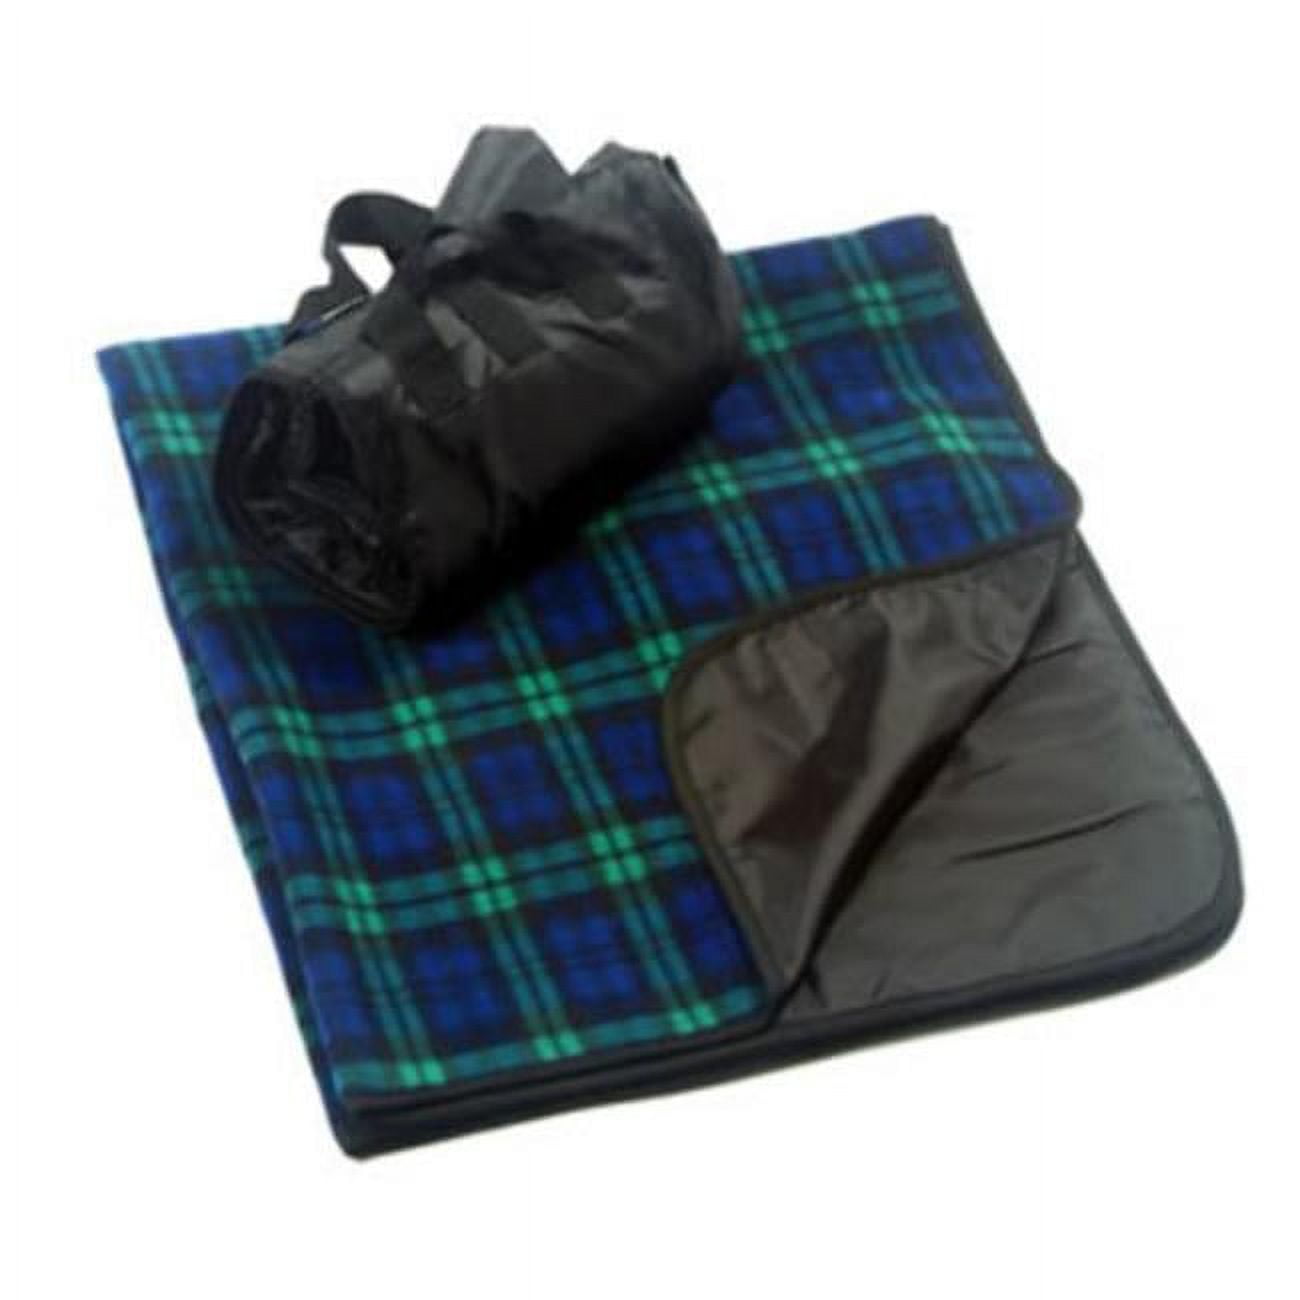 2327042 50 X 60 In. Waterproof Outdoor & Picnic Blankets, Blackwatch - Case Of 24